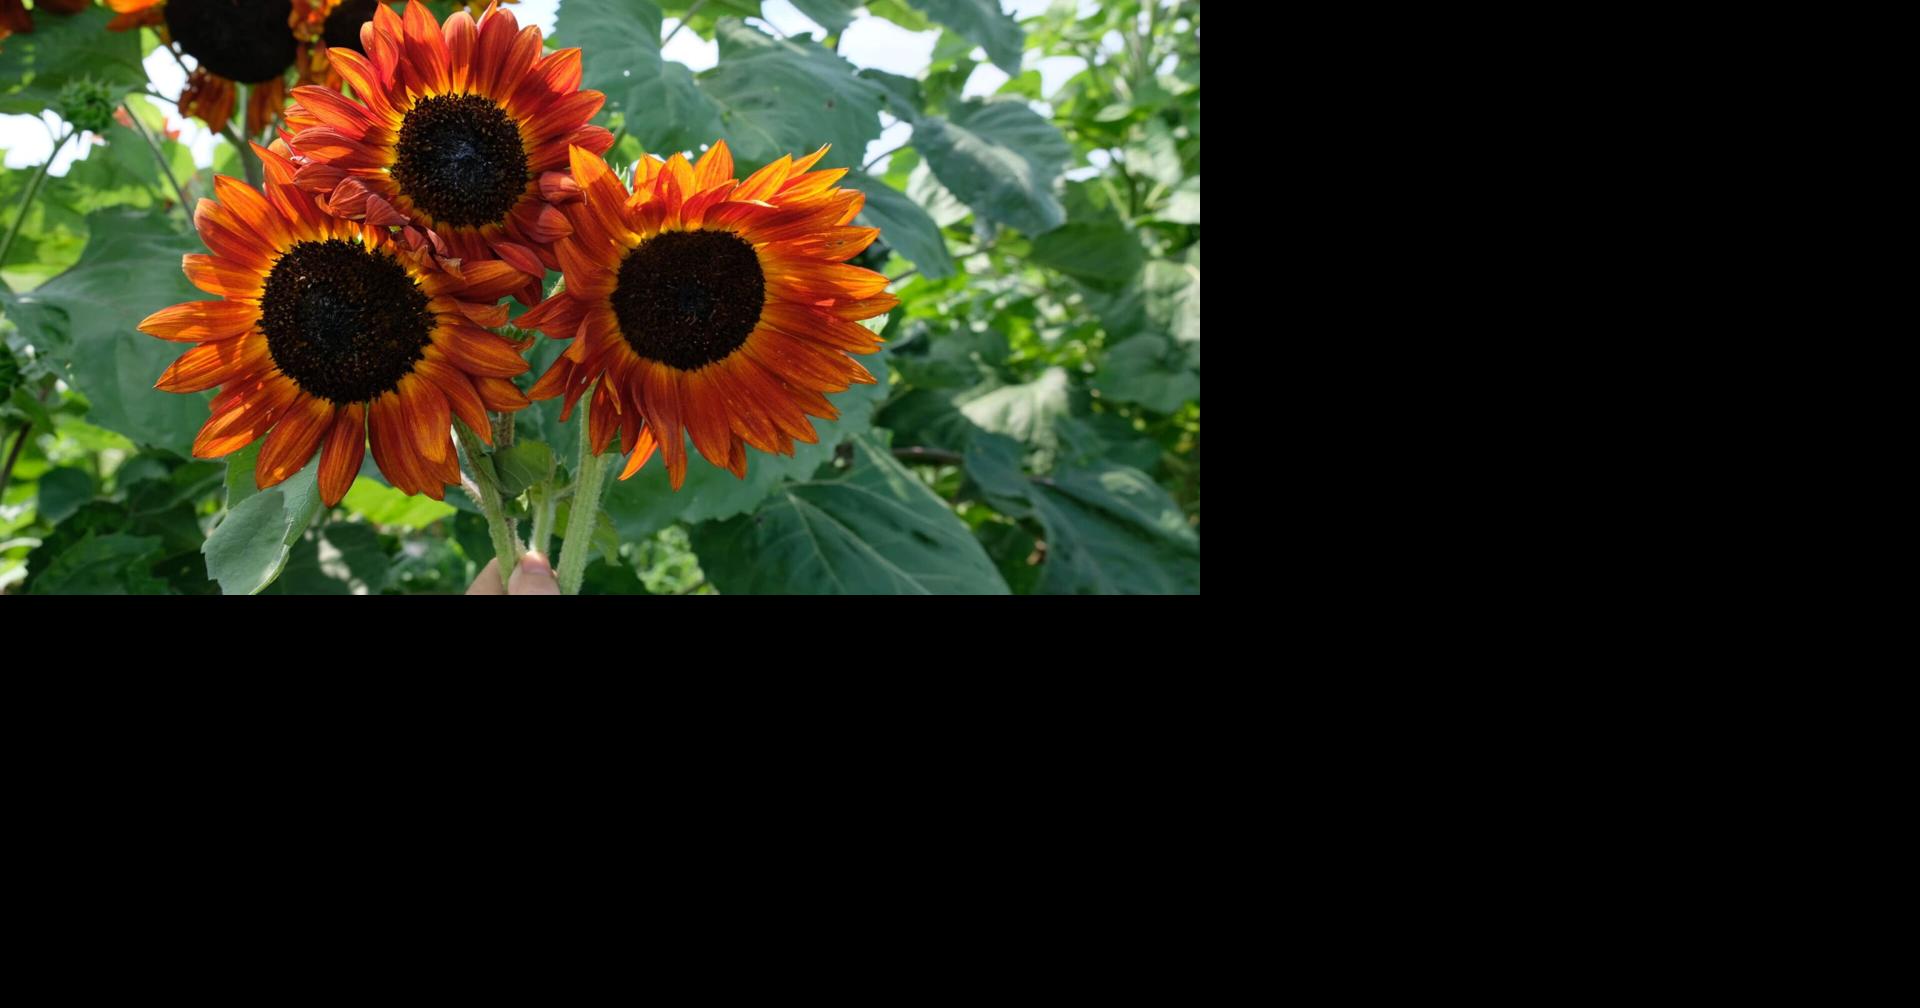 Garden column: Examining the beautiful sunflower | Community